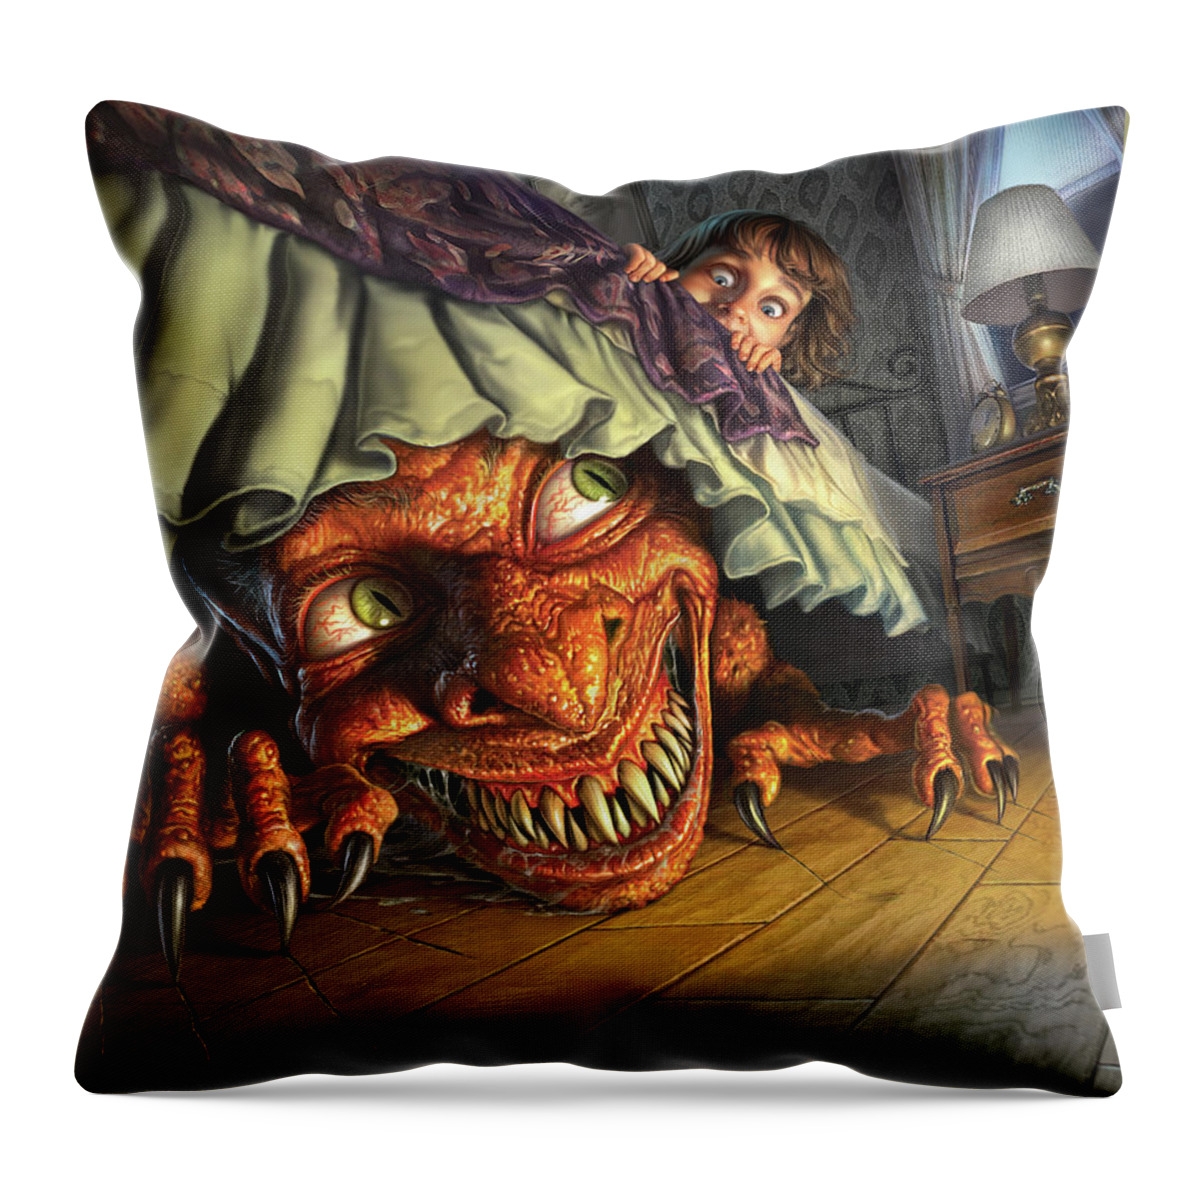 Monster Throw Pillow featuring the digital art Last Night At Grandma's by Mark Fredrickson